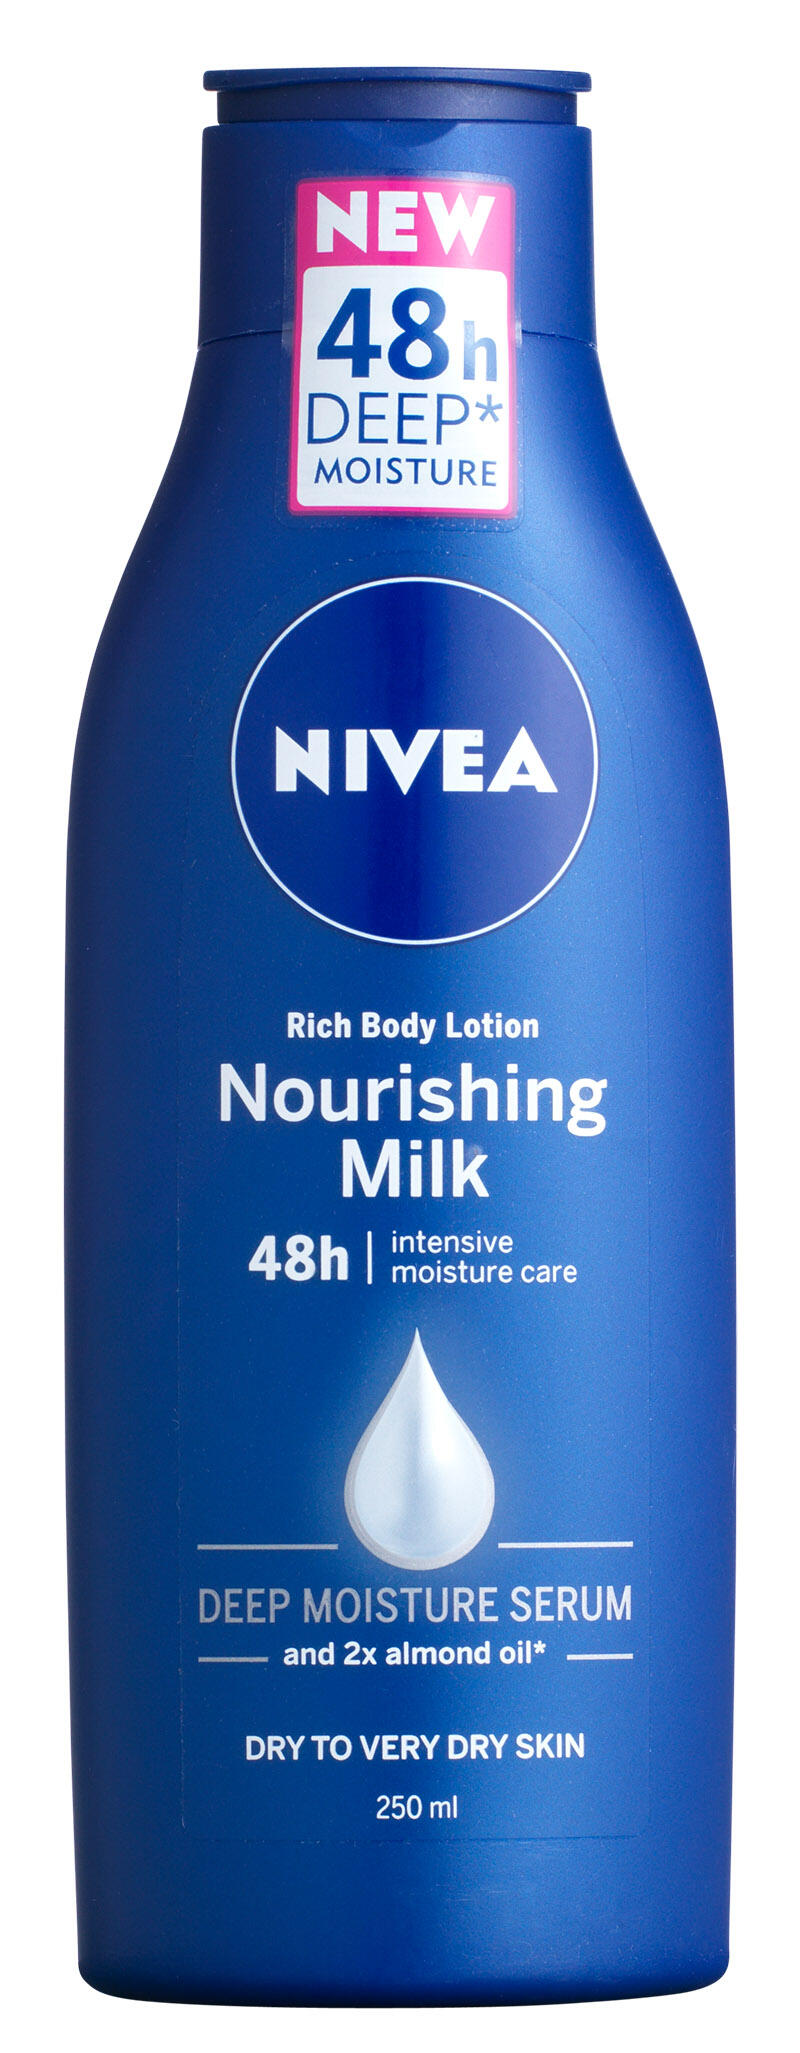 Rich body lotion Nourishing milk 48H Nivea